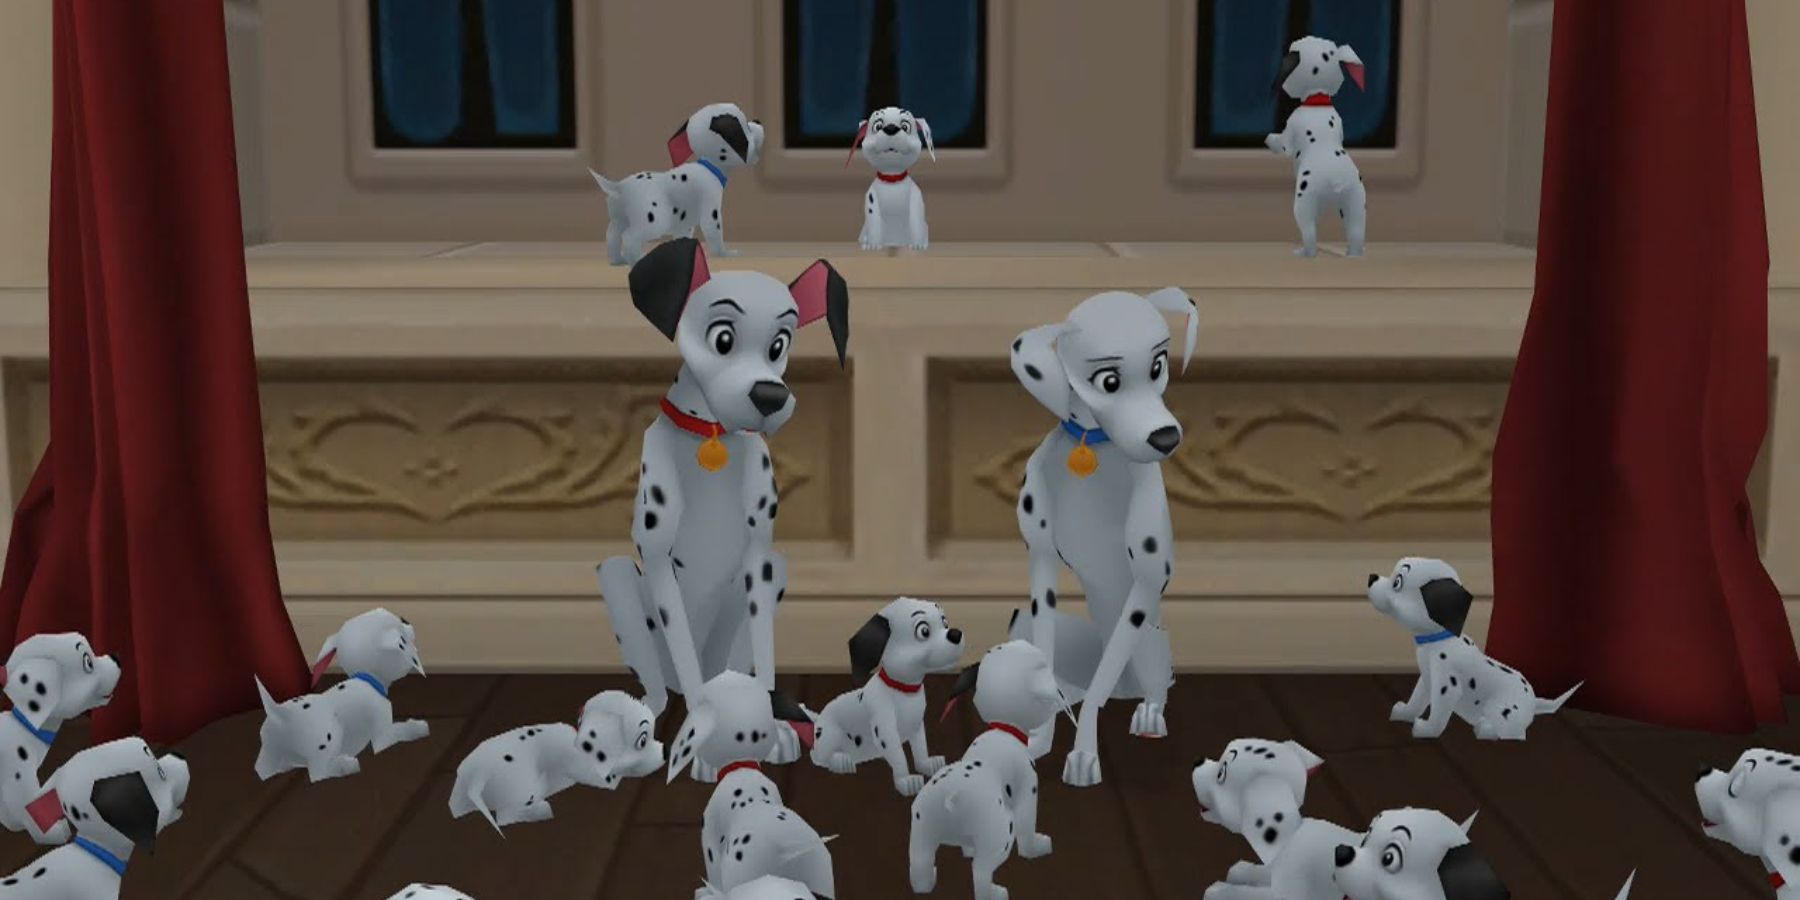 Pongo, Perdita, and their puppies in Kingdom Hearts